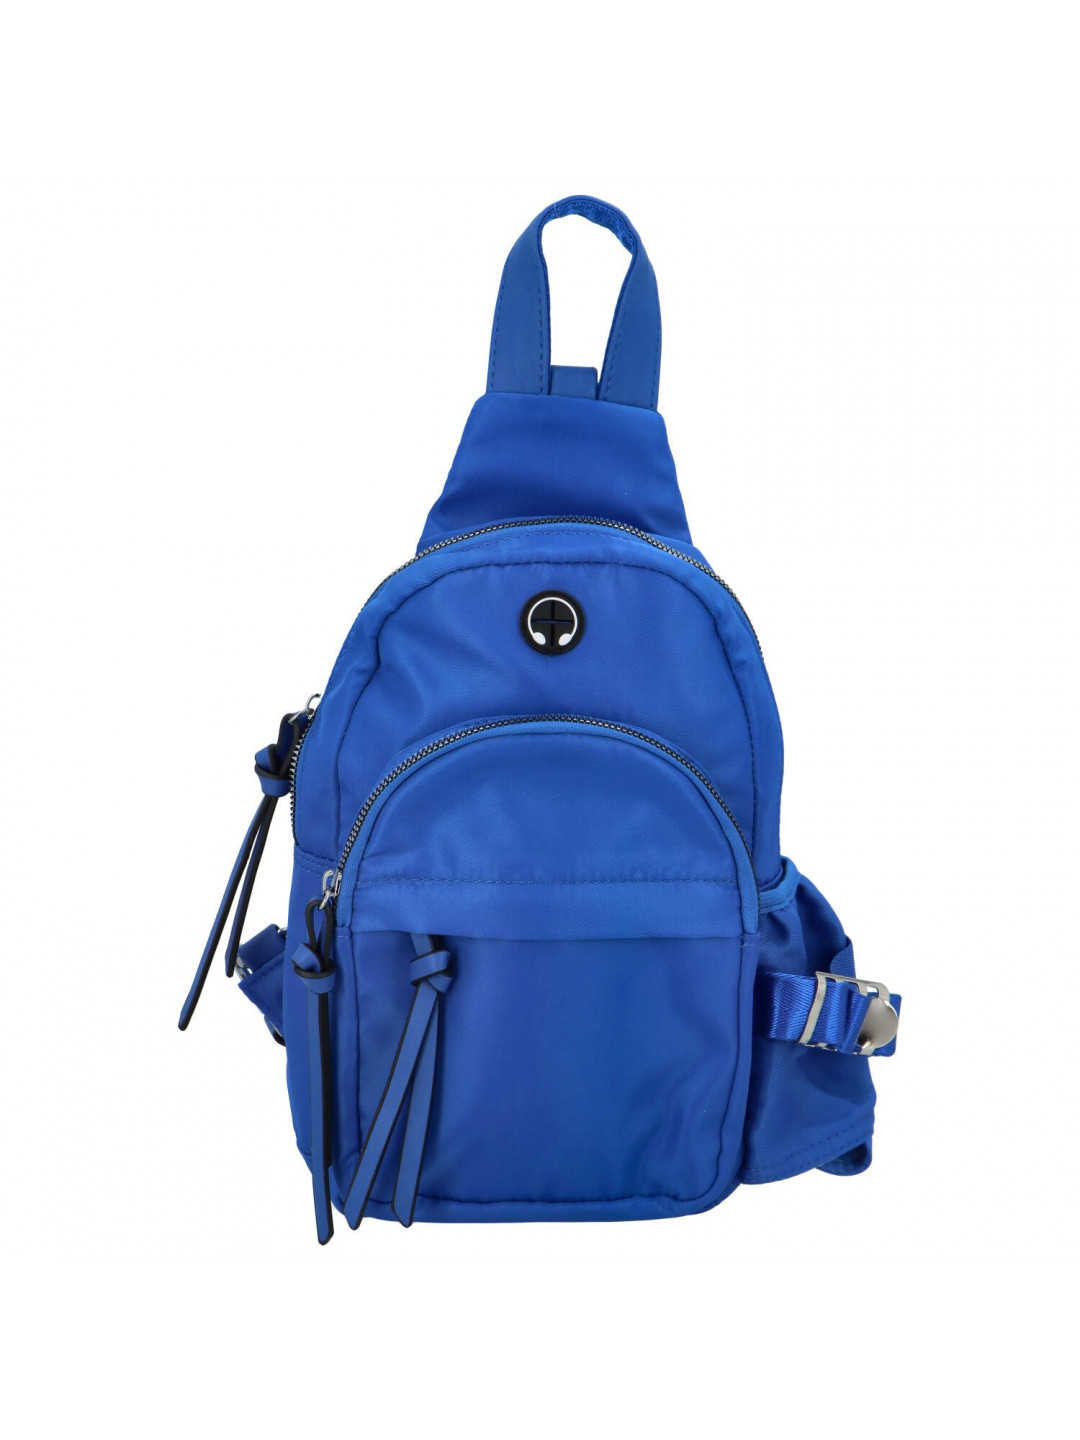 Dámský batoh modrý – Paolo bags Varvaras